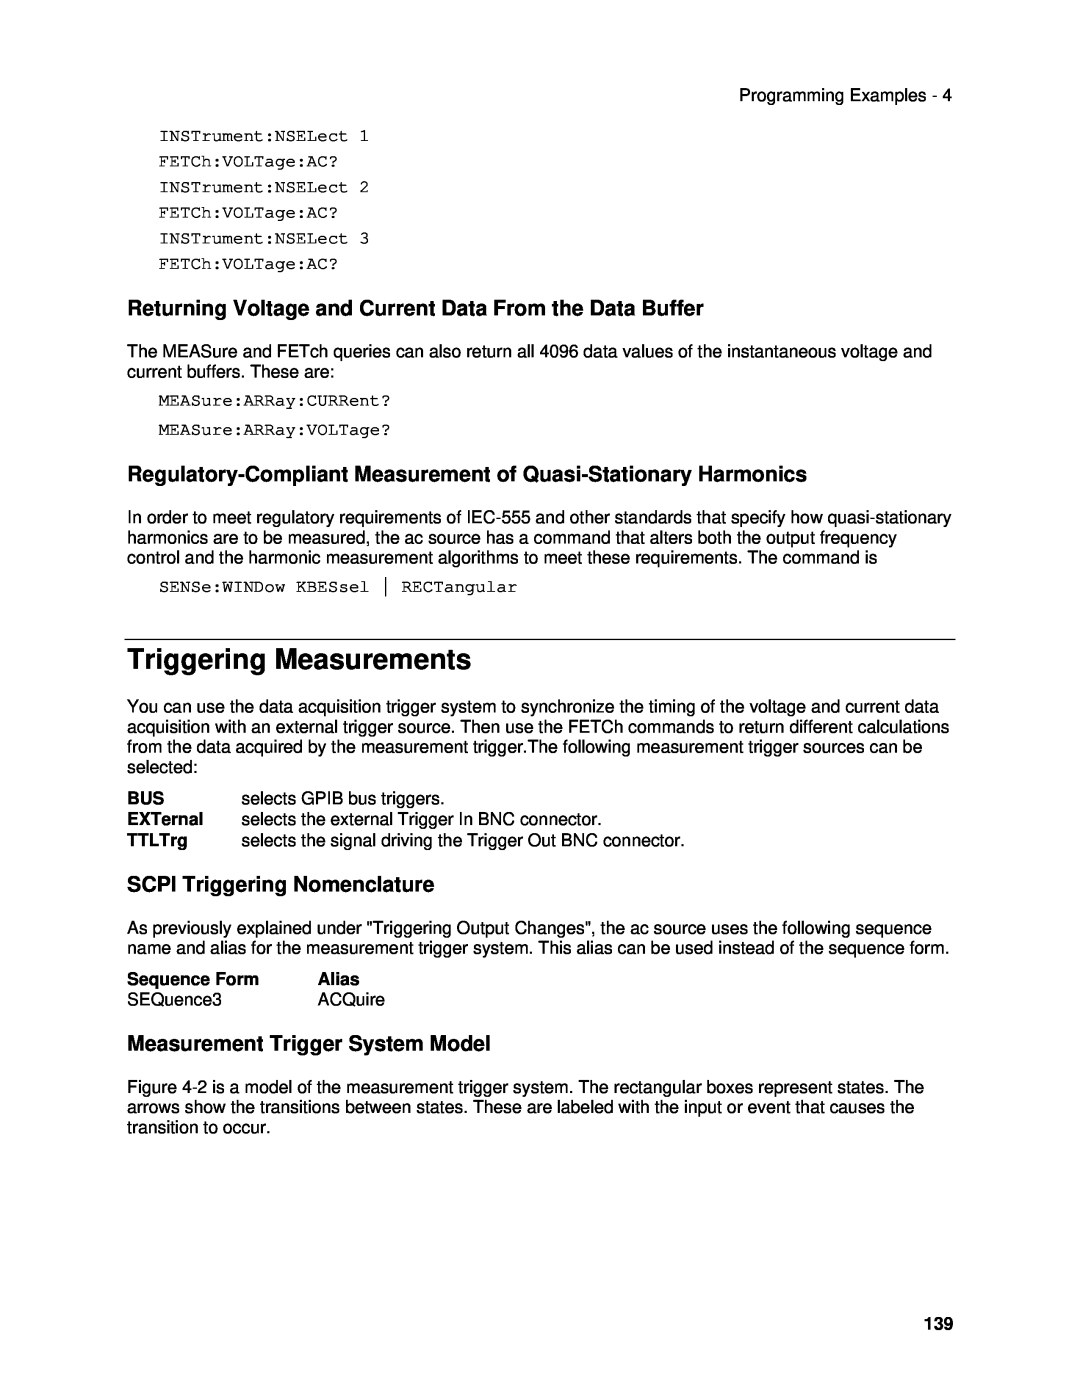 Agilent Technologies 6814B, 6834B Triggering Measurements, Measurement Trigger System Model, SCPI Triggering Nomenclature 